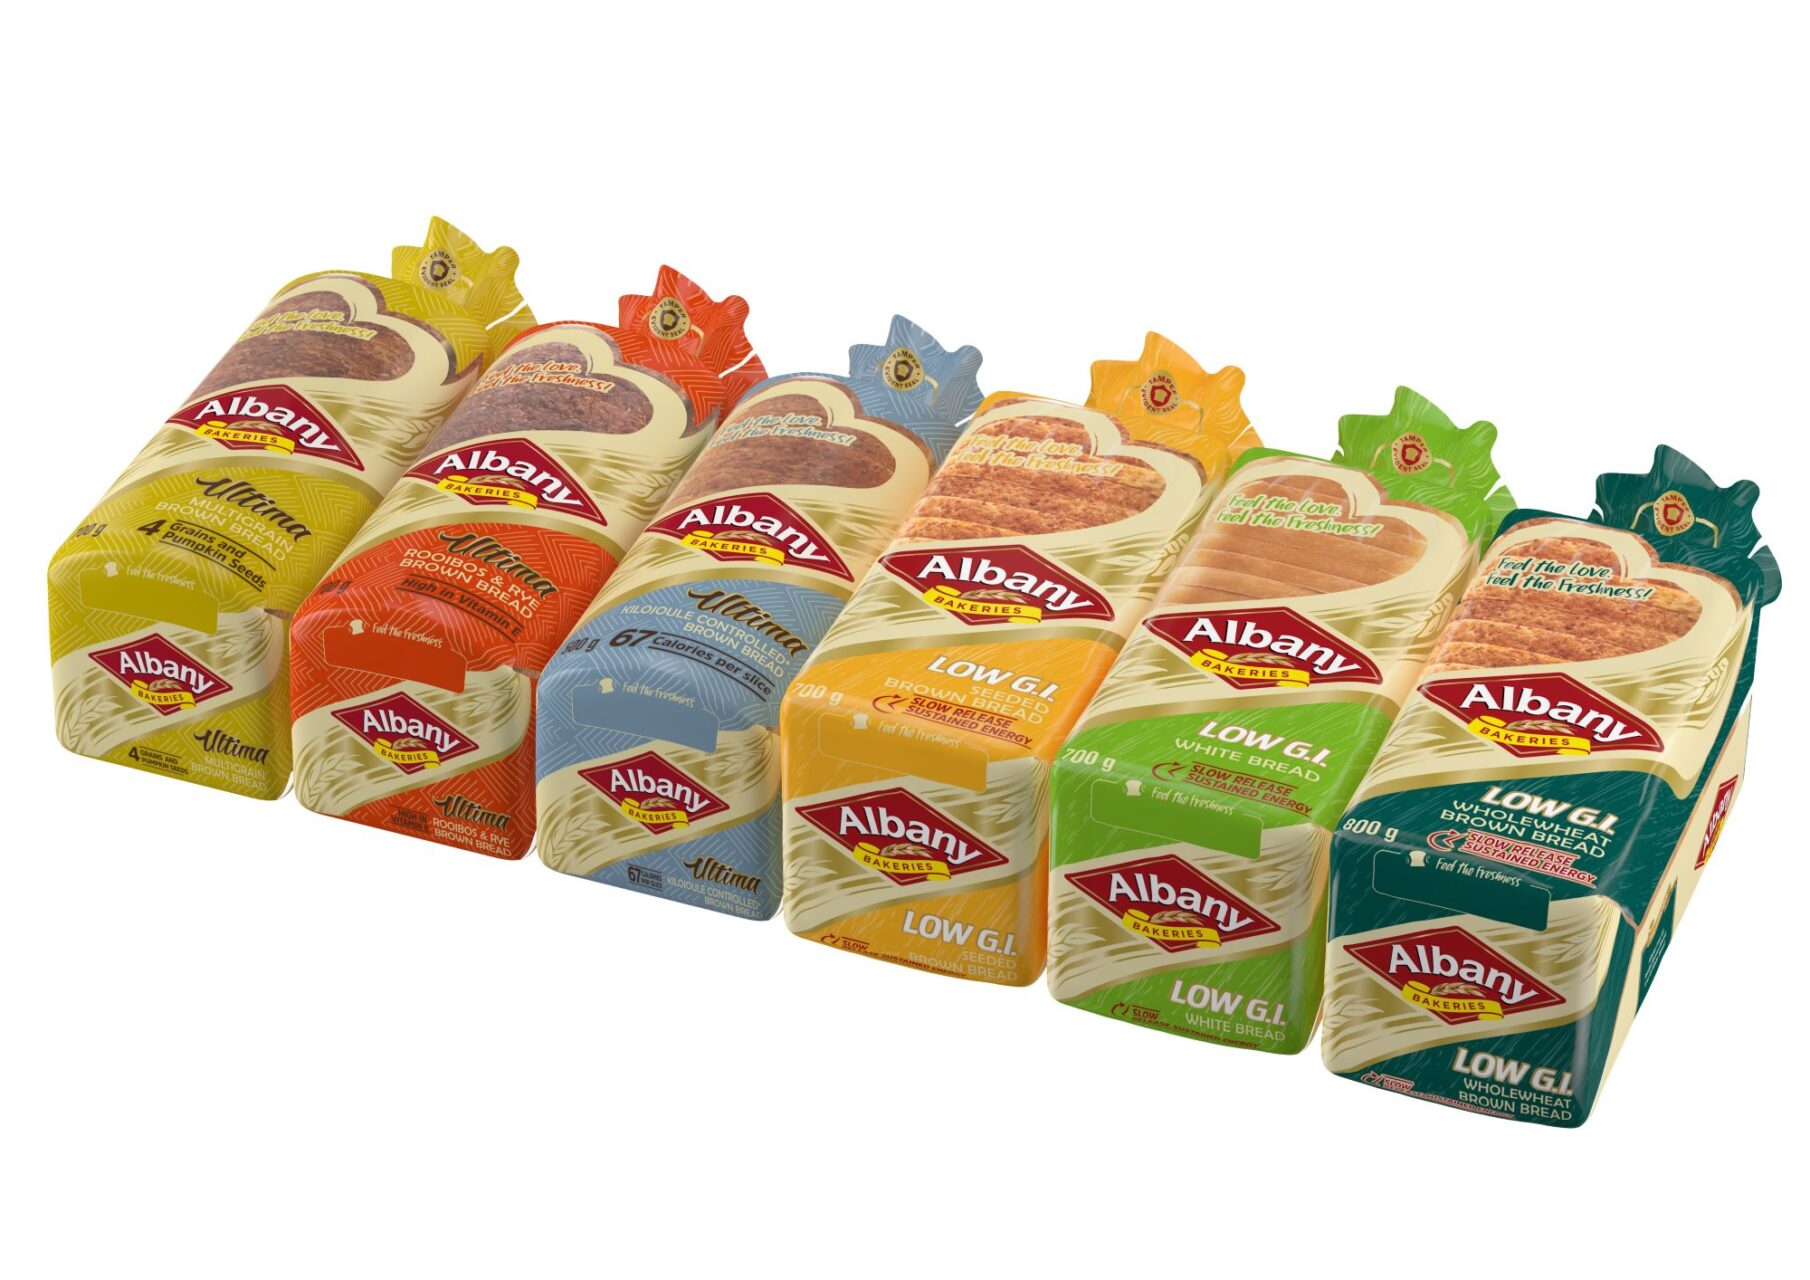 Albany Bread New Packaging Design Agency Full Range South Africa Berge Farrell